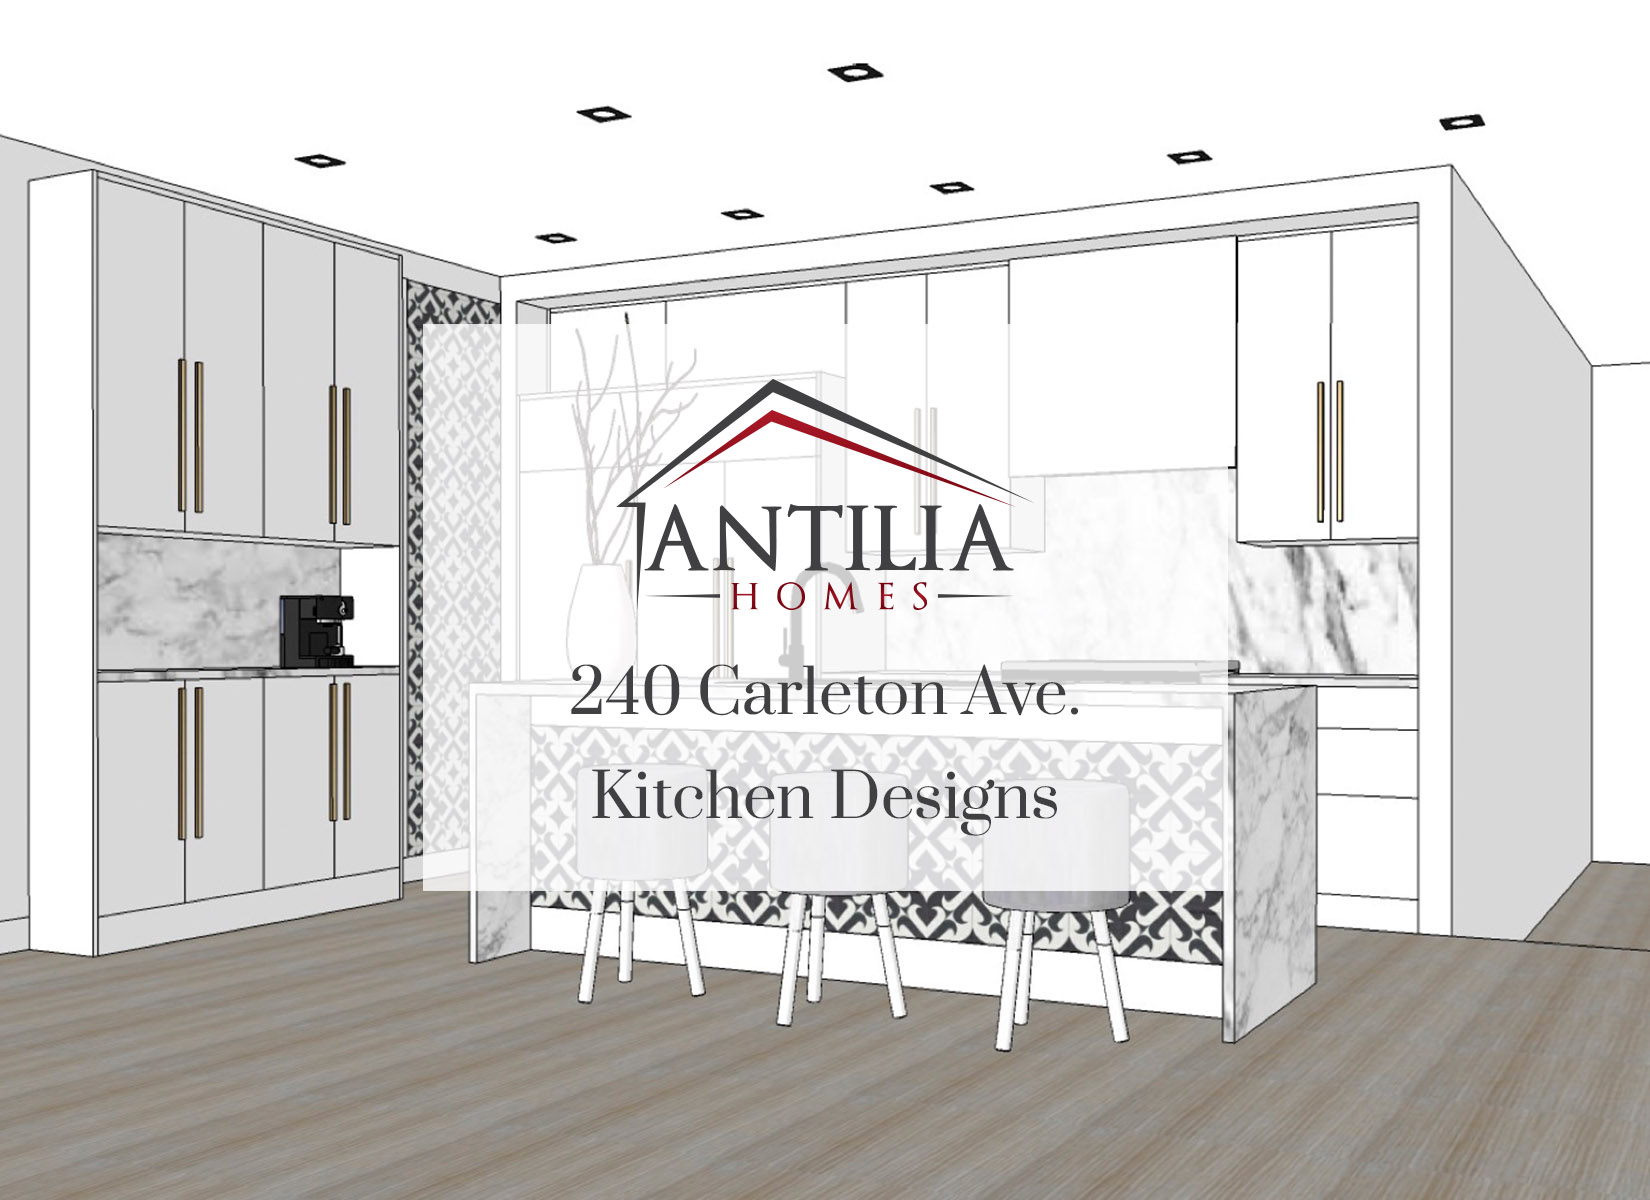 Kitchen Designs for Carleton Avenue Phase 2